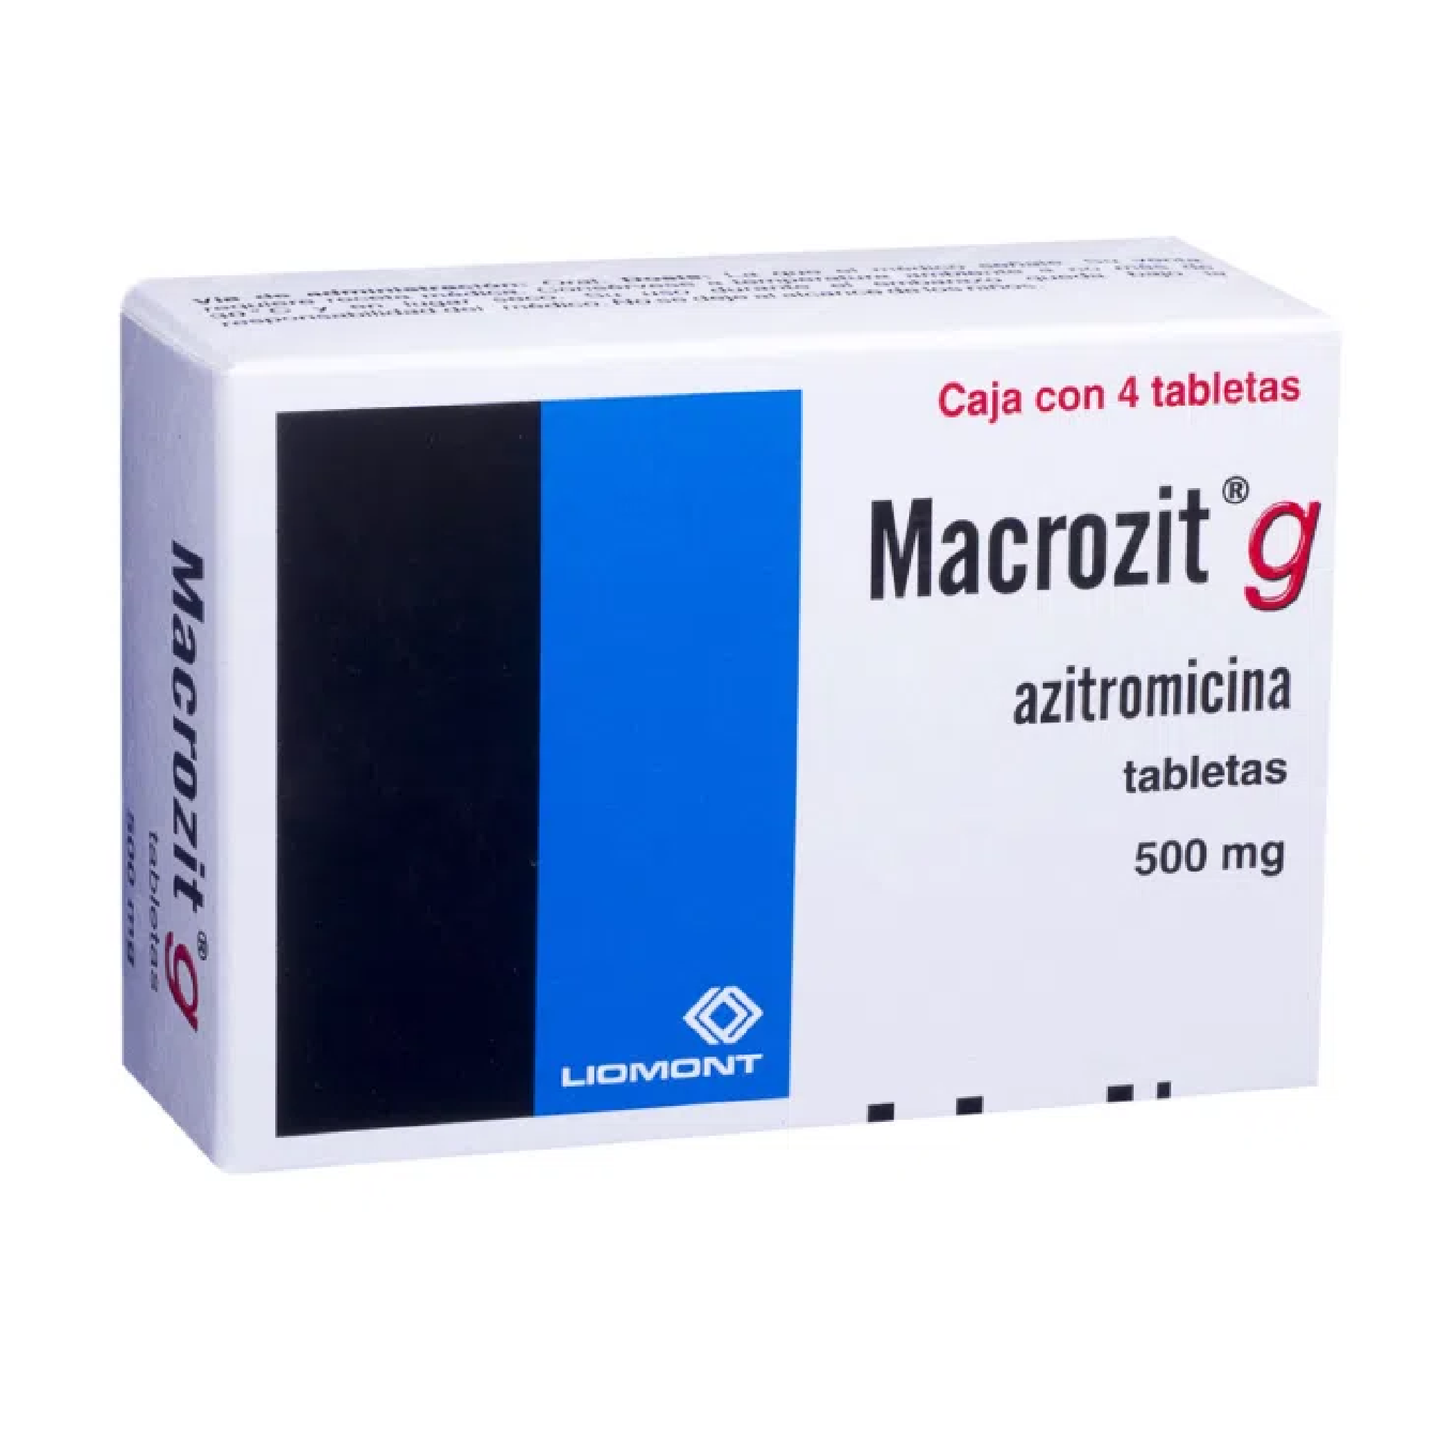 Macrozit G (Azitromicina) 500mg